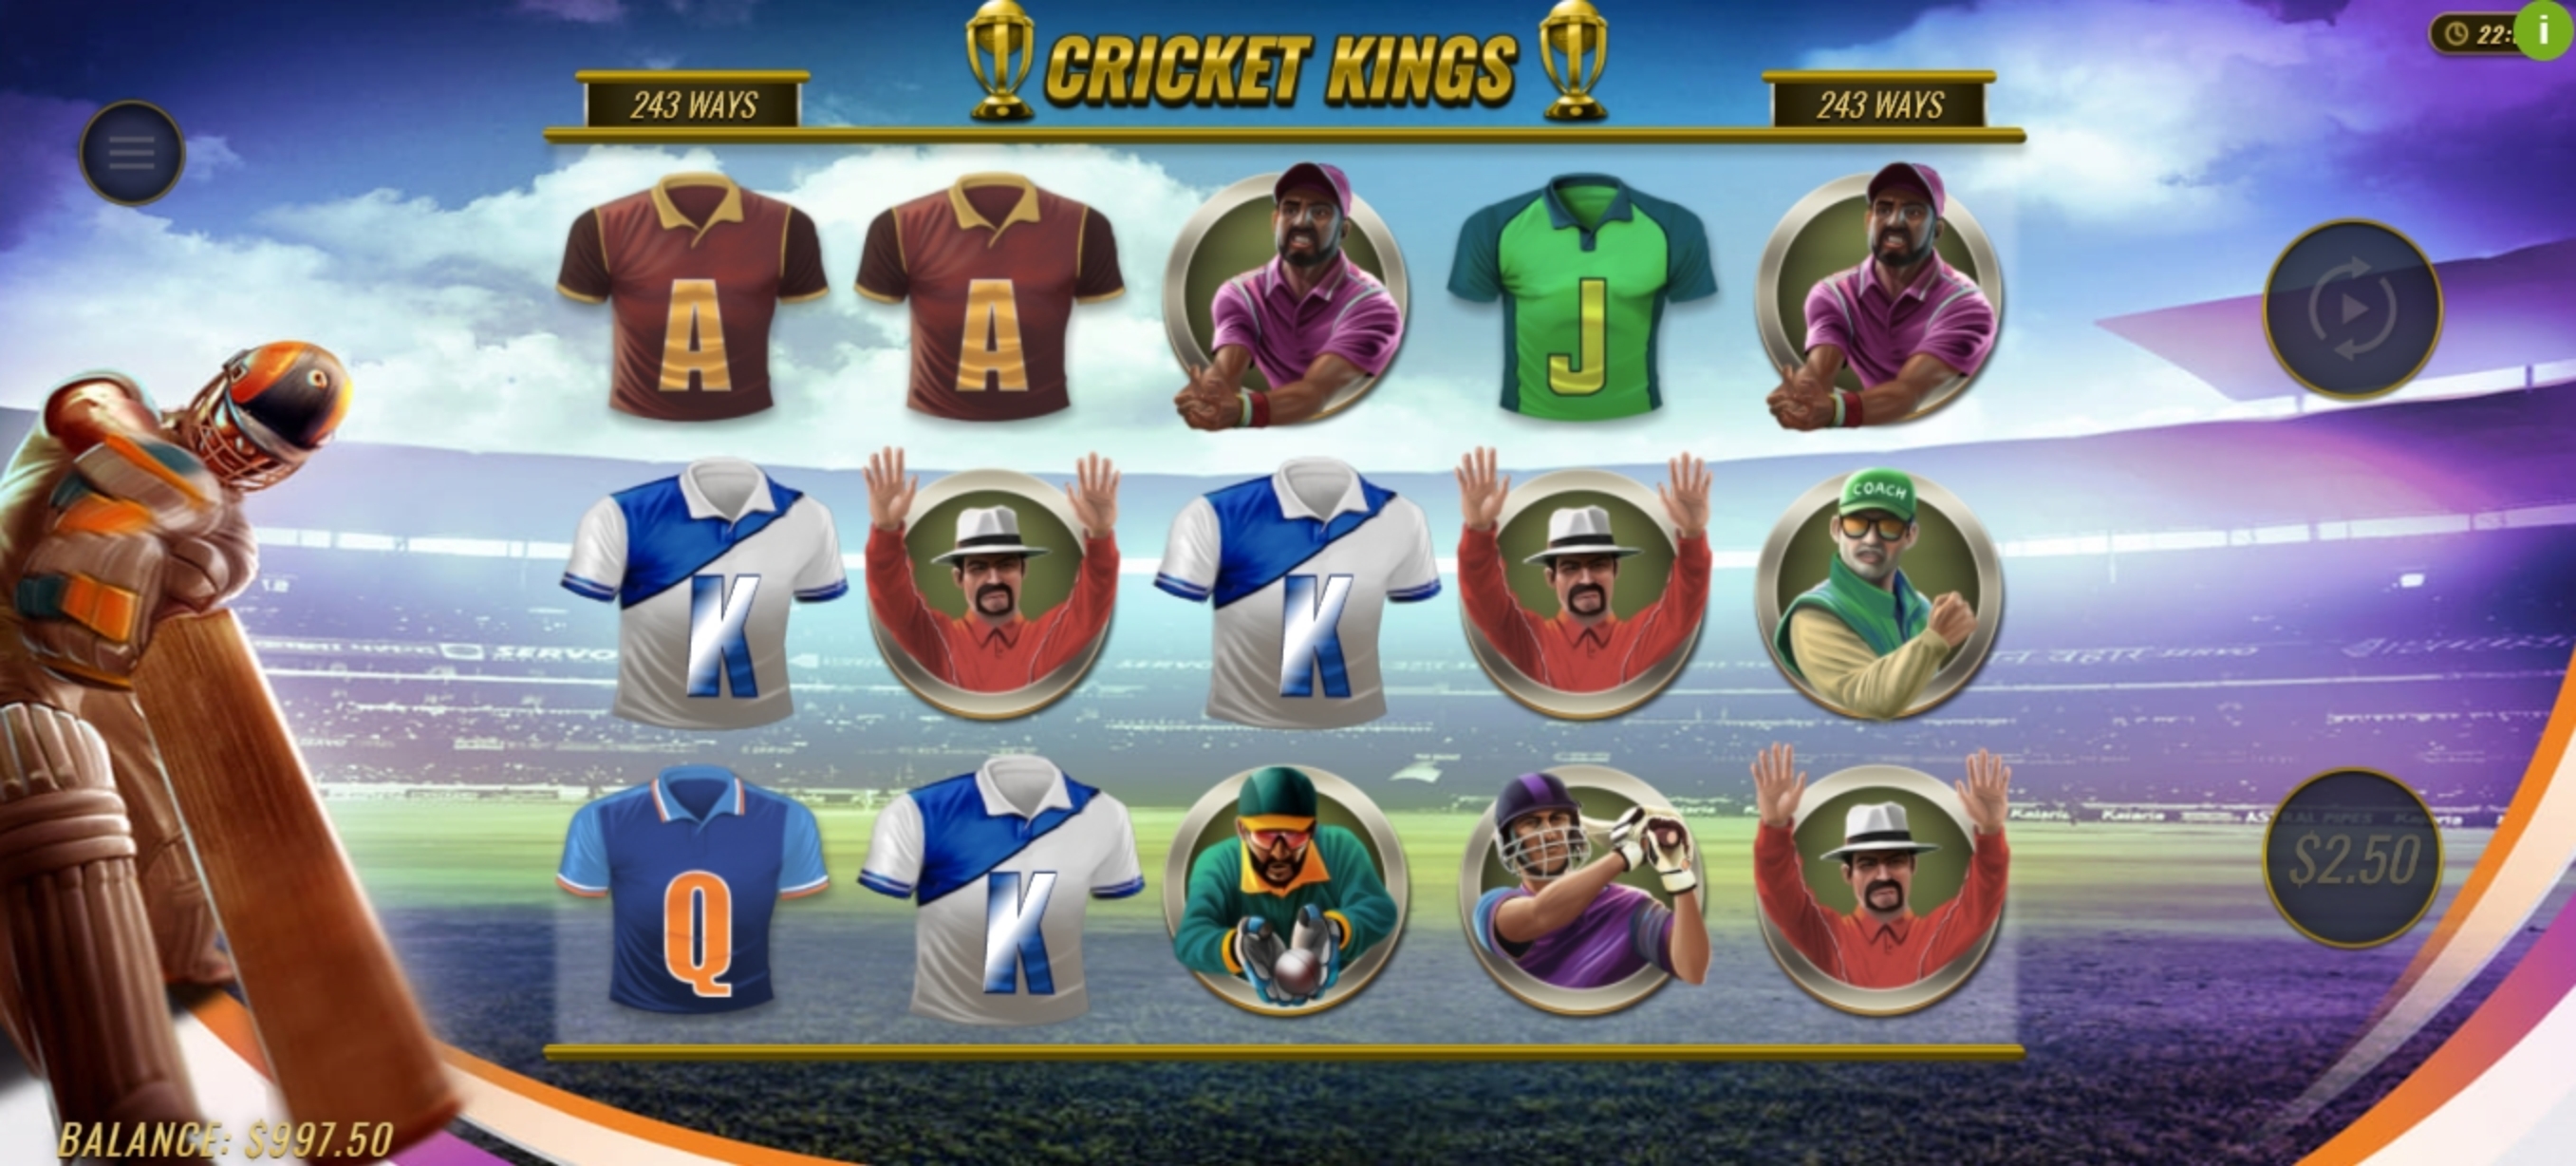 Win Money in Cricket Kings Free Slot Game by Woohoo